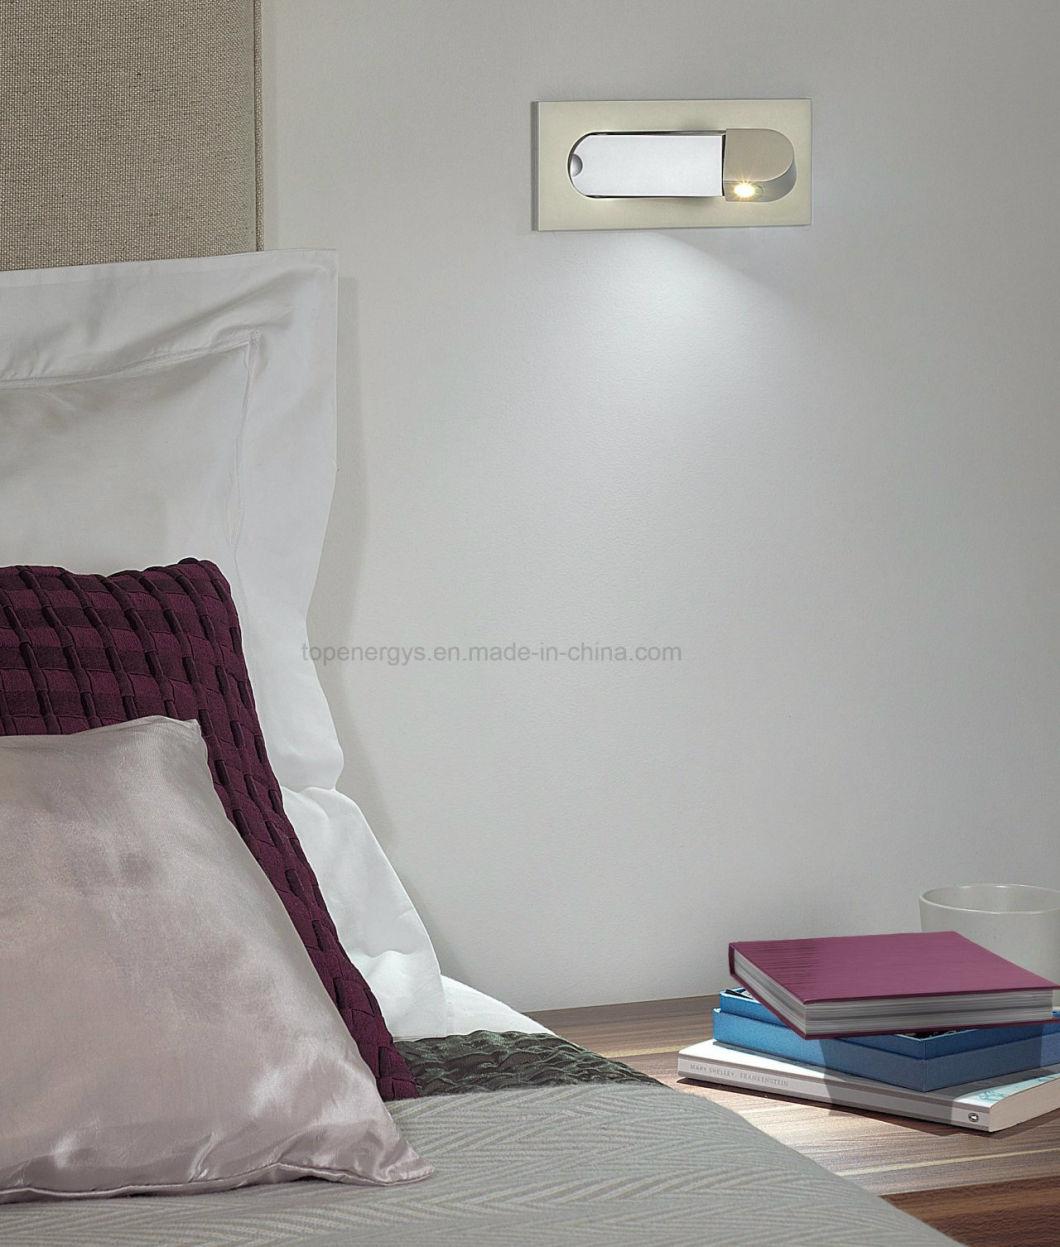 Rotatable LED Wall Lamp Bh-001 Decorative Adjustable Headboard Light Hotel Bedside Reading Light